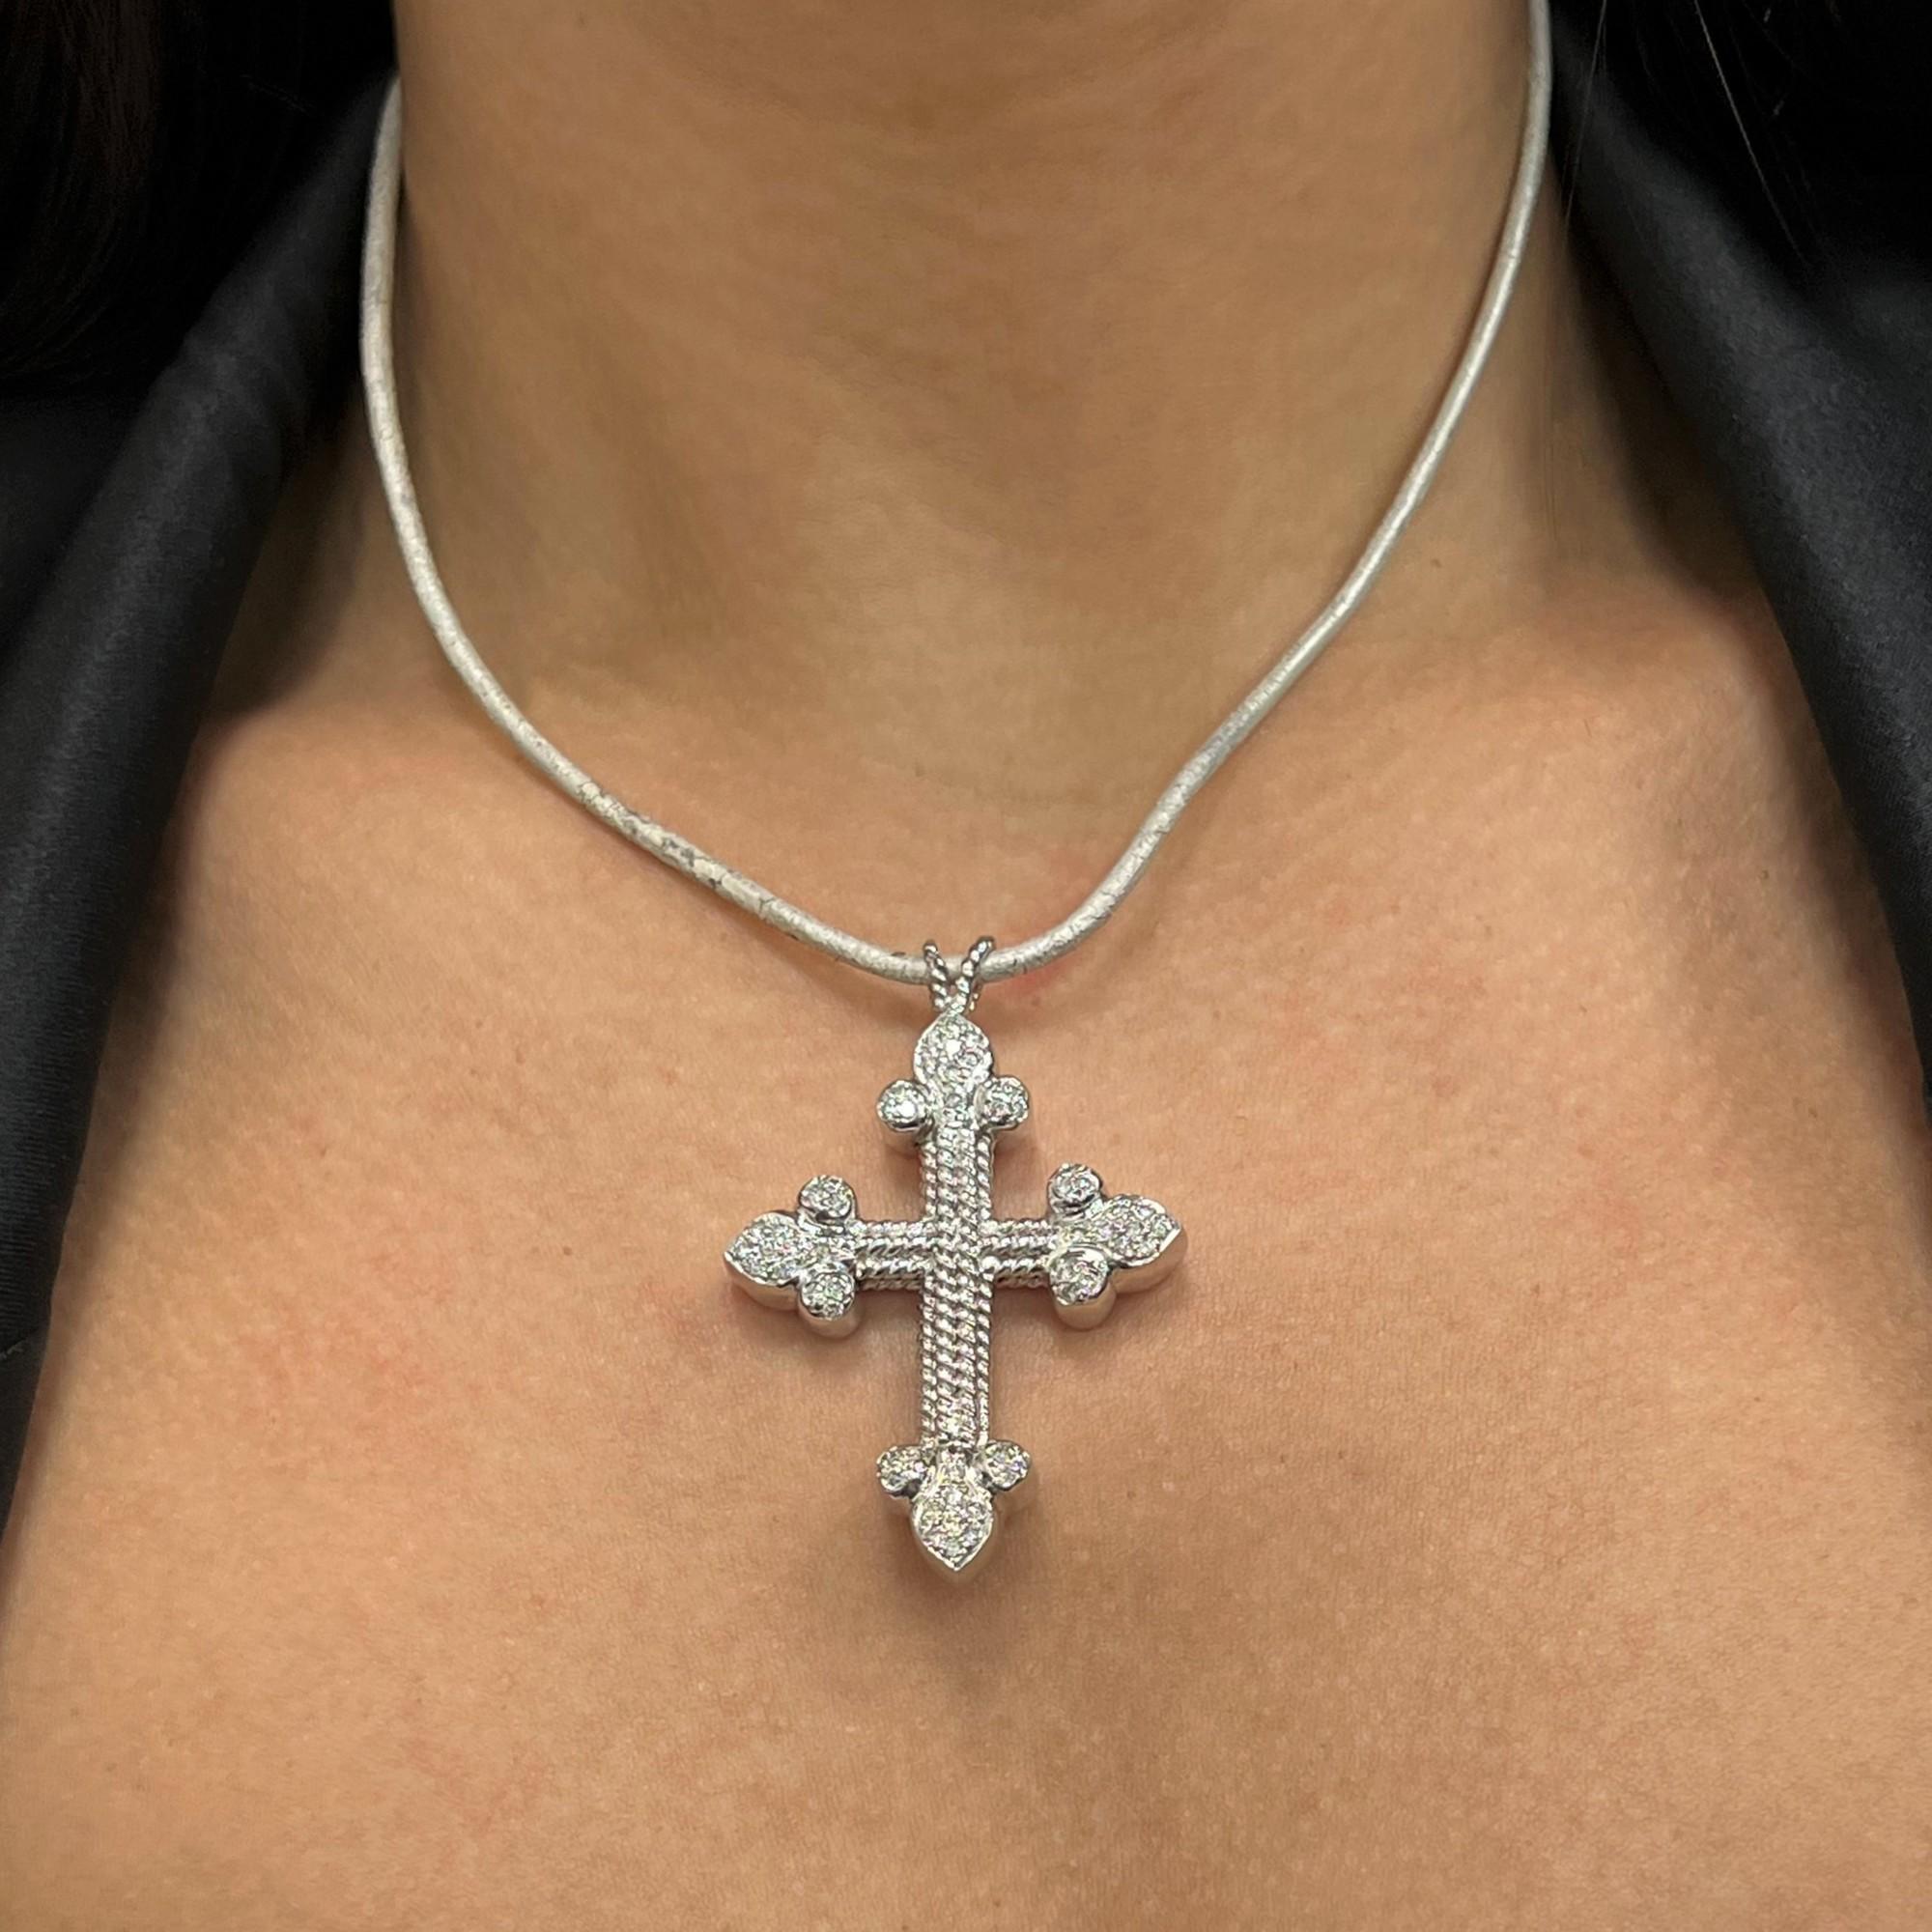 Round Cut Rachel Koen Diamond Cross Women's Pendant Necklace in 18K White Gold 0.22Cttw For Sale